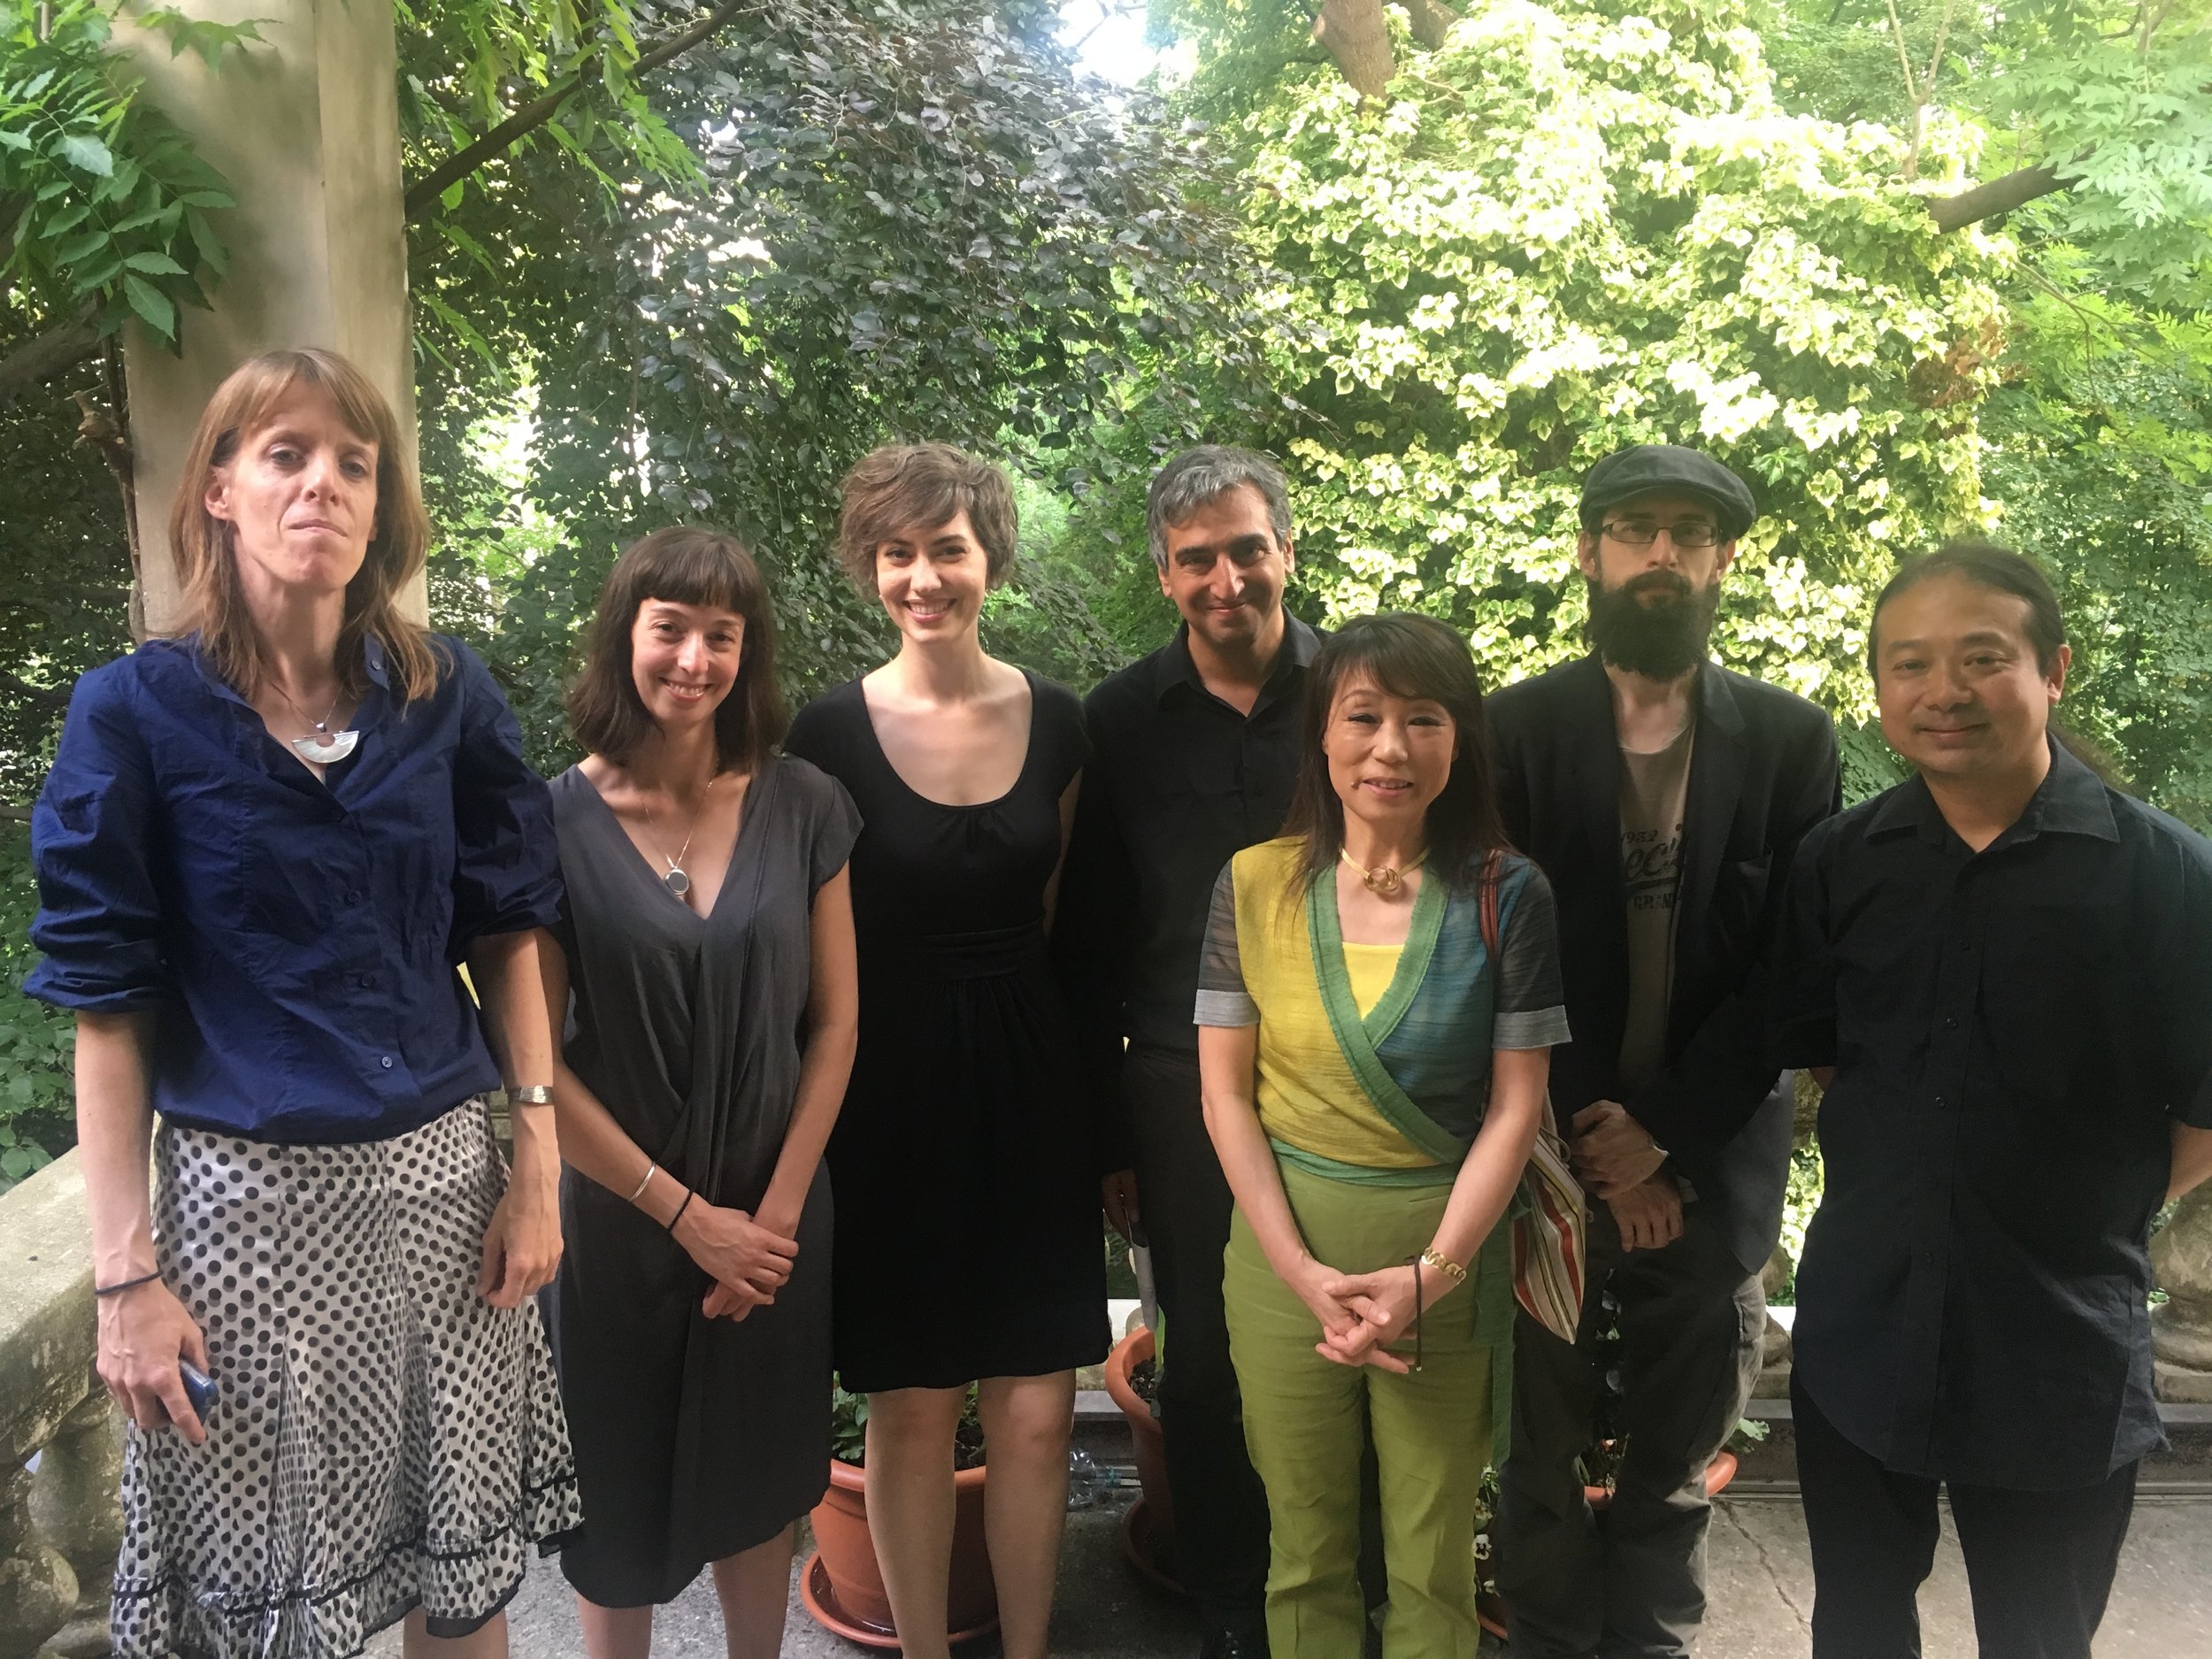  From left to right: Janika Gelinek, Anne Posten, Madeleine LaRue, Daniel Medin, Unsuk Chin, Clemens J. Setz, Wu Wei 